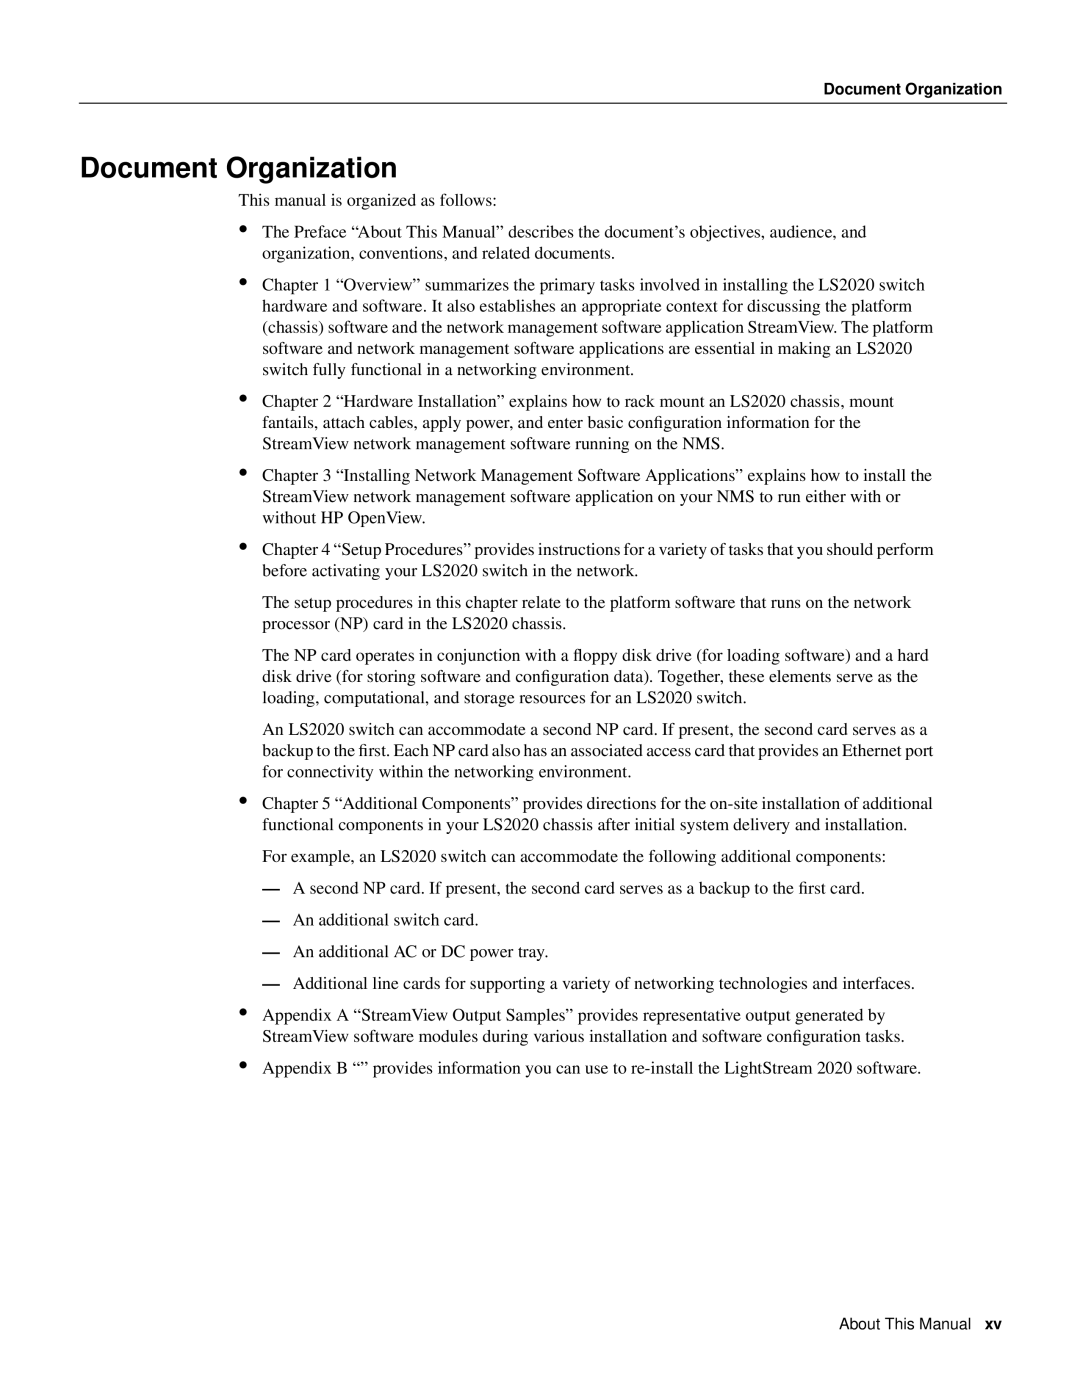 Cisco Systems LS2020 manual Document Organization 